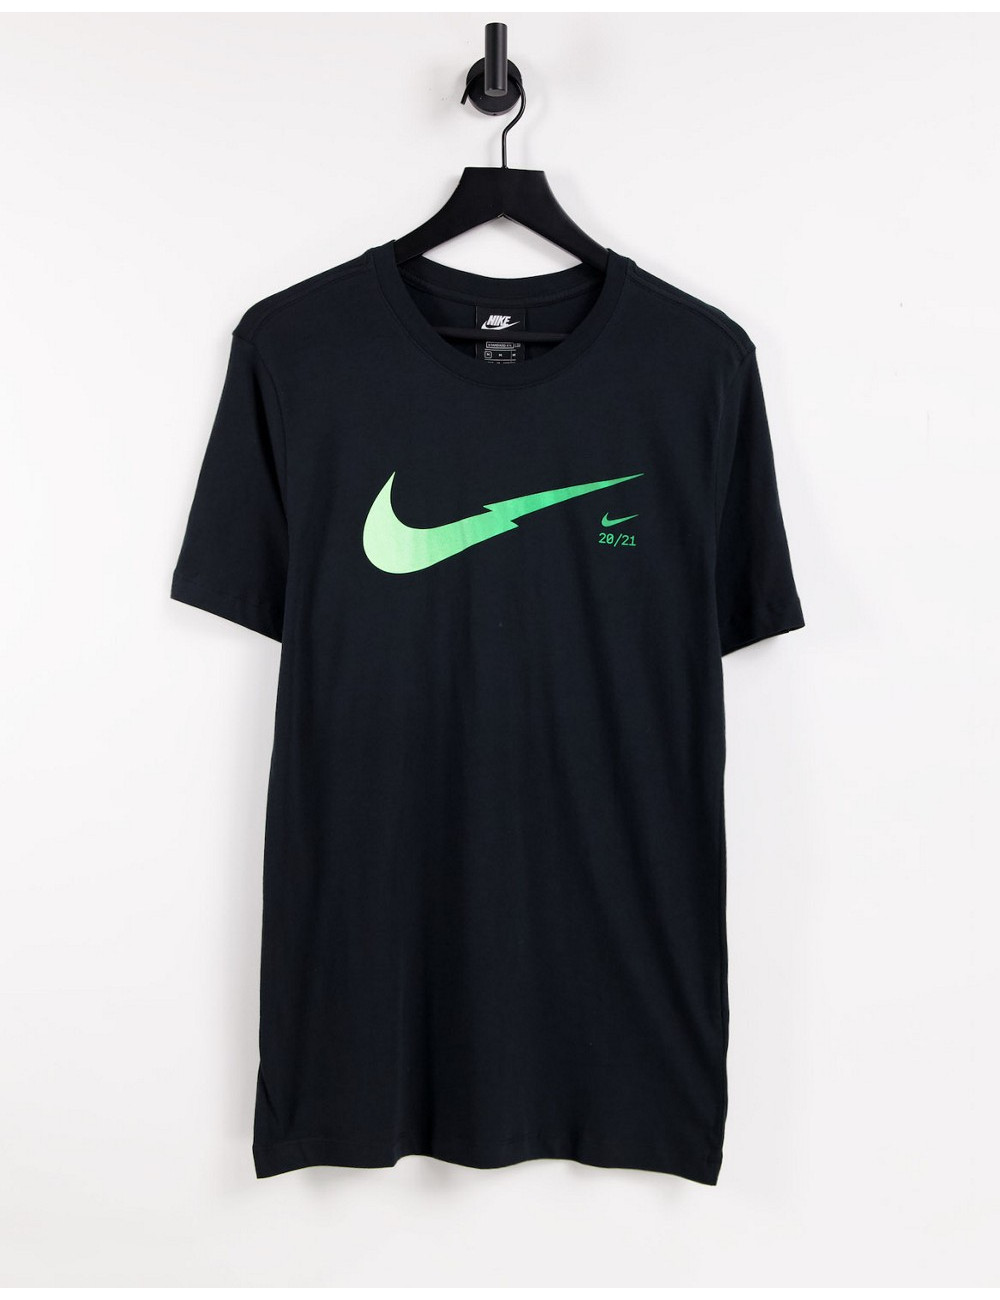 Nike Zig Zag logo t-shirt...